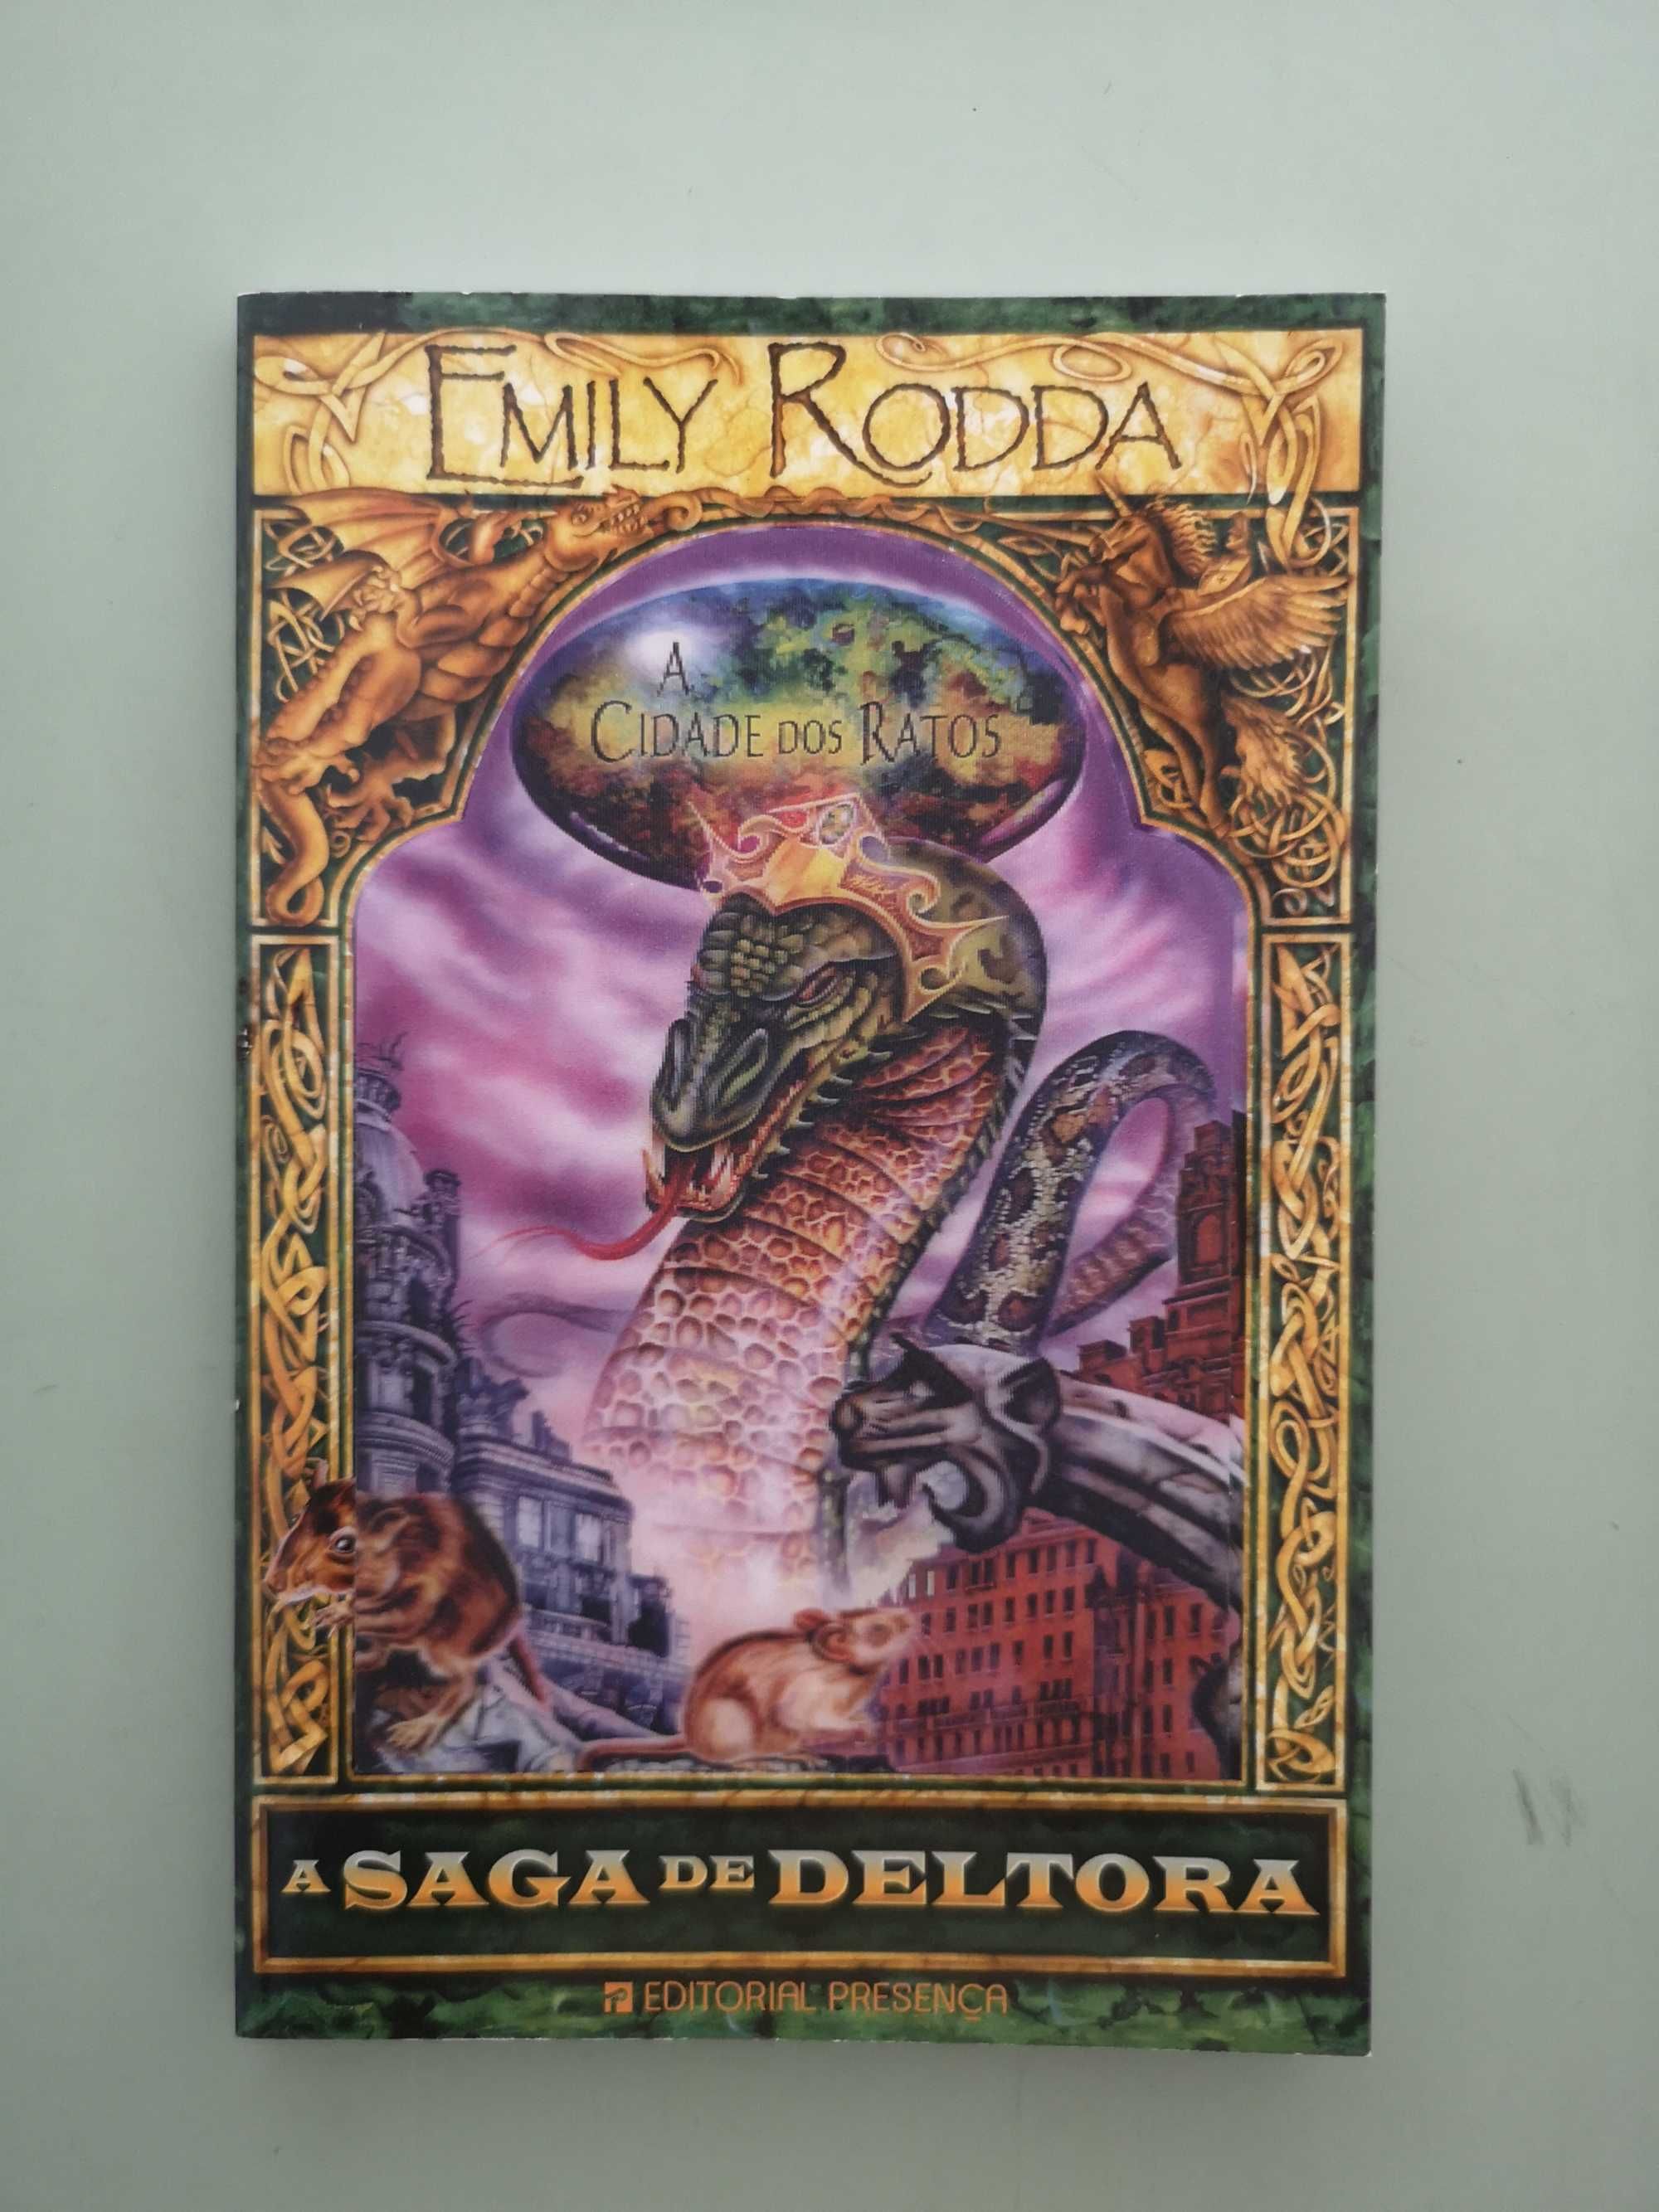 A Saga de Deltora - Emily Rodda Vol I, II e III com litografias